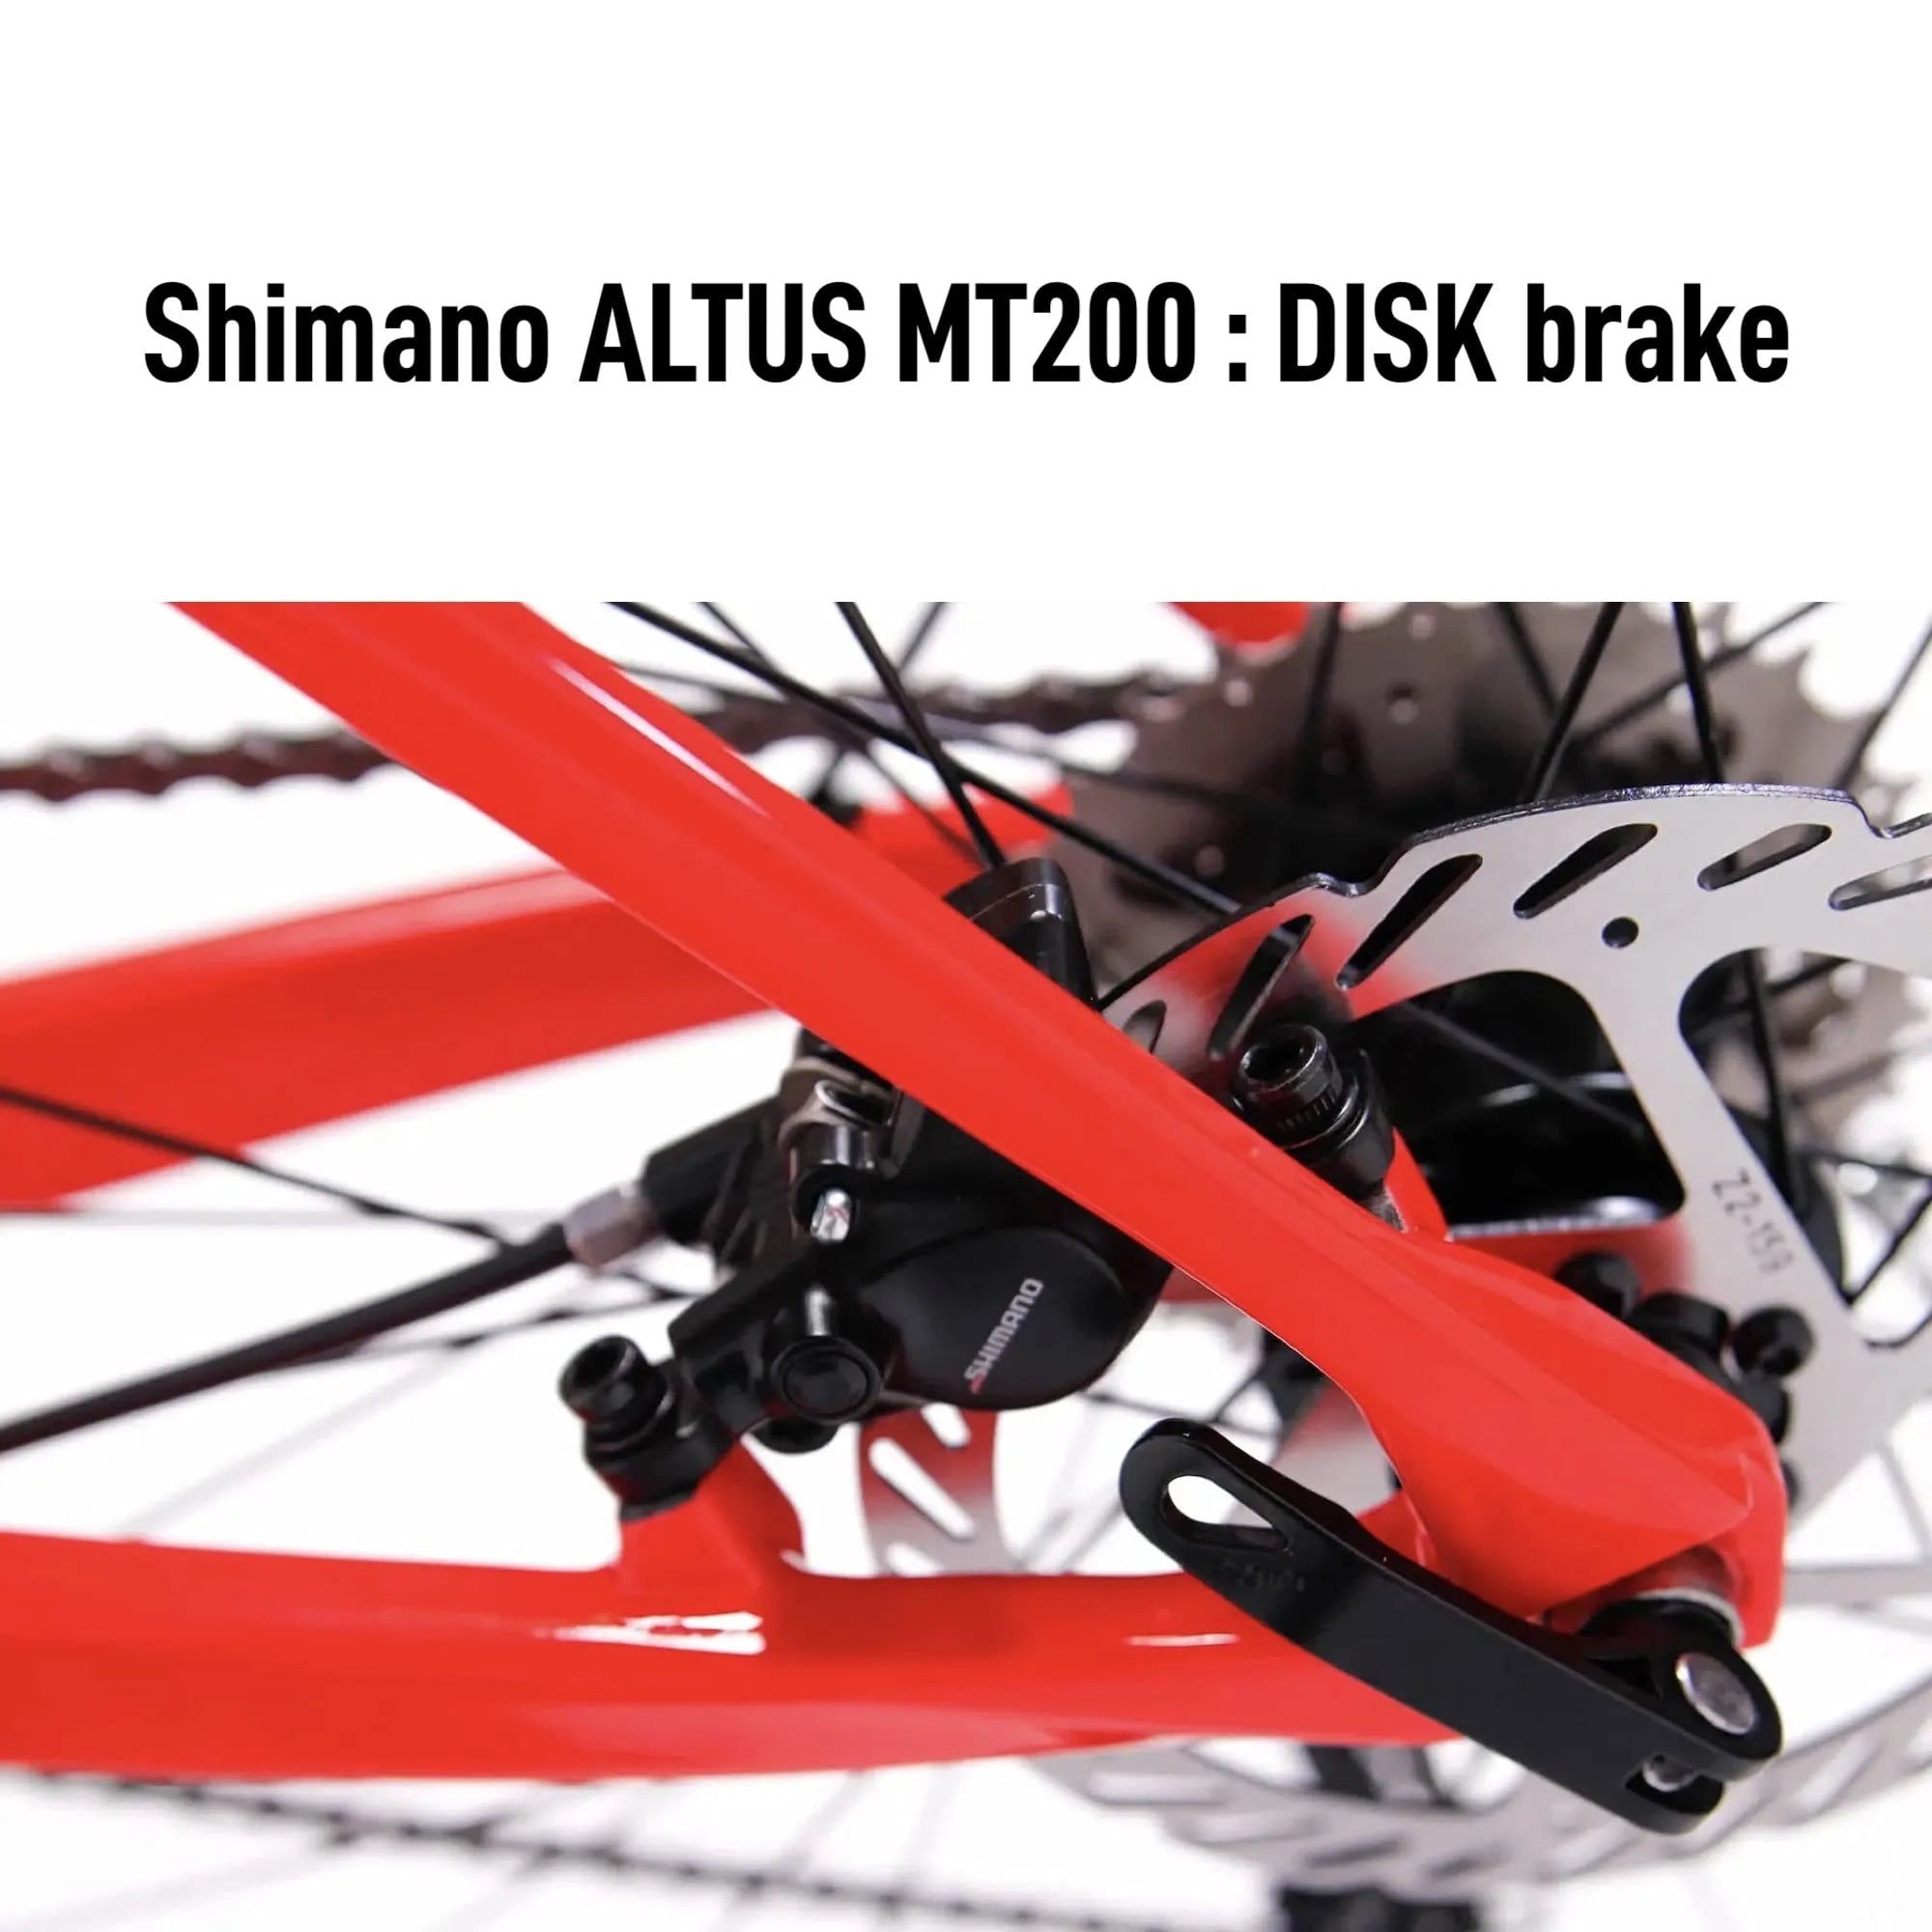 Model T - Carbon frame road MTB bike Shimano Altus 27s